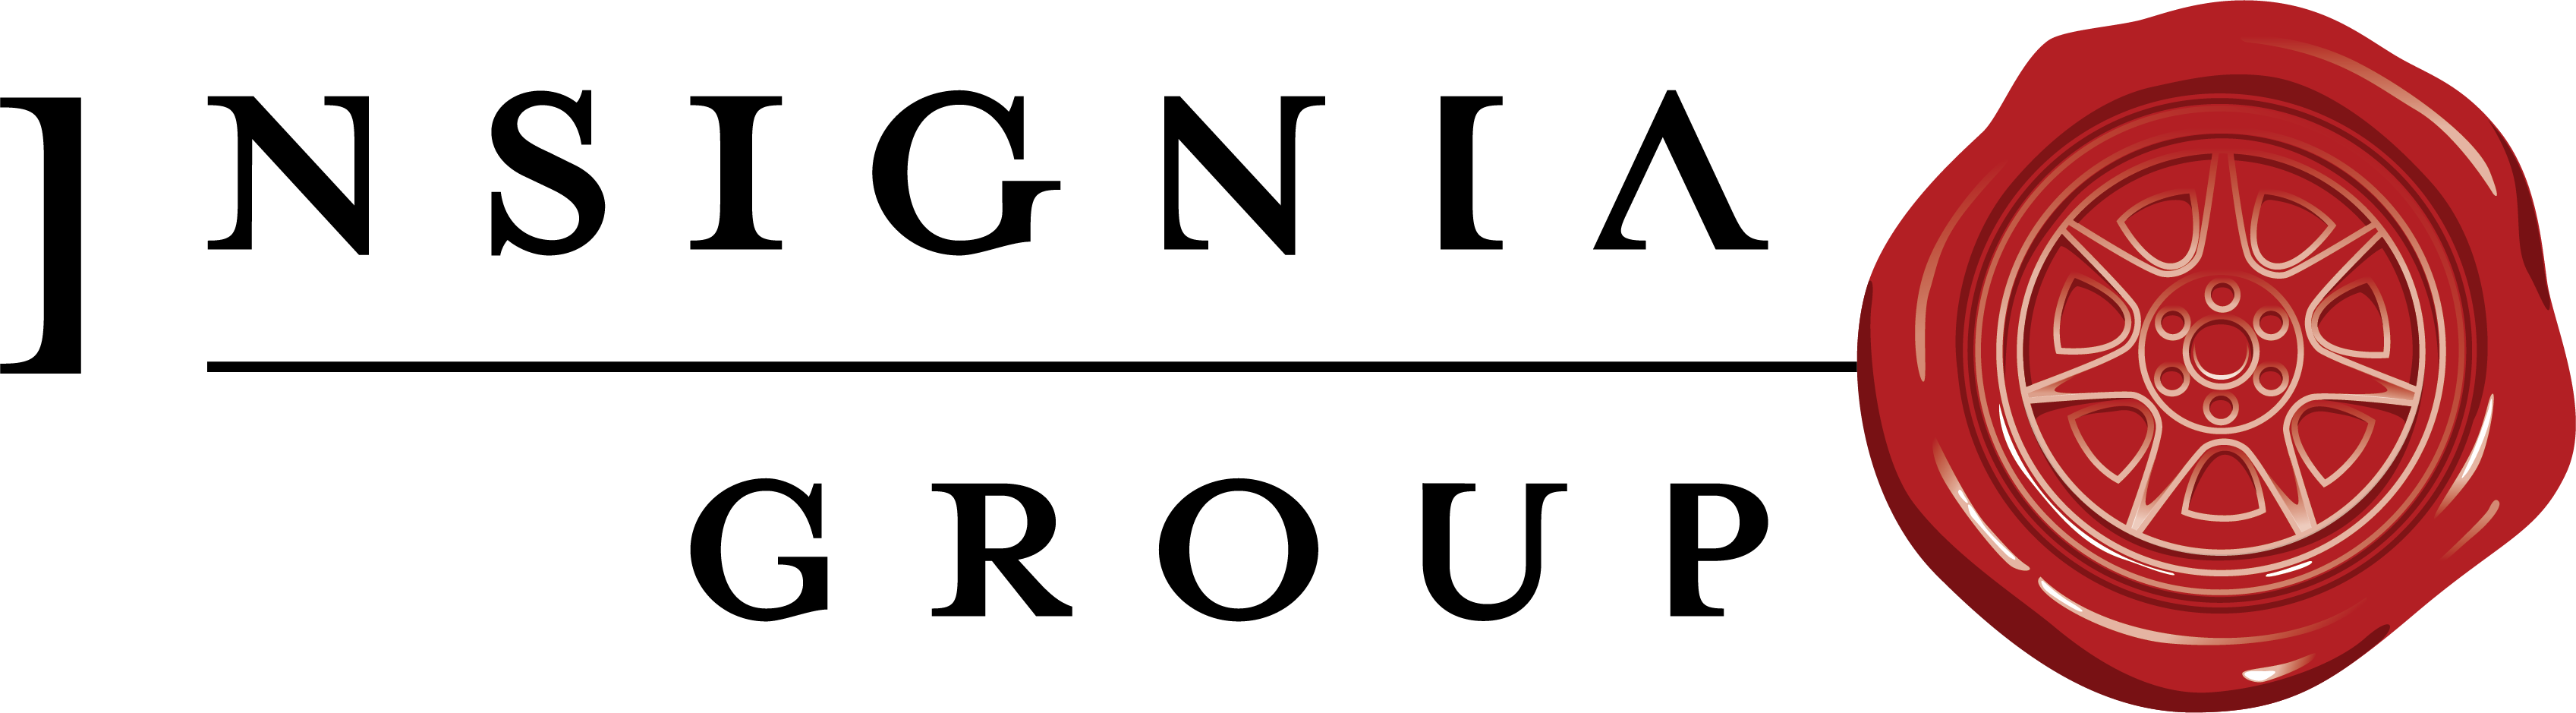 Insignia Group logo